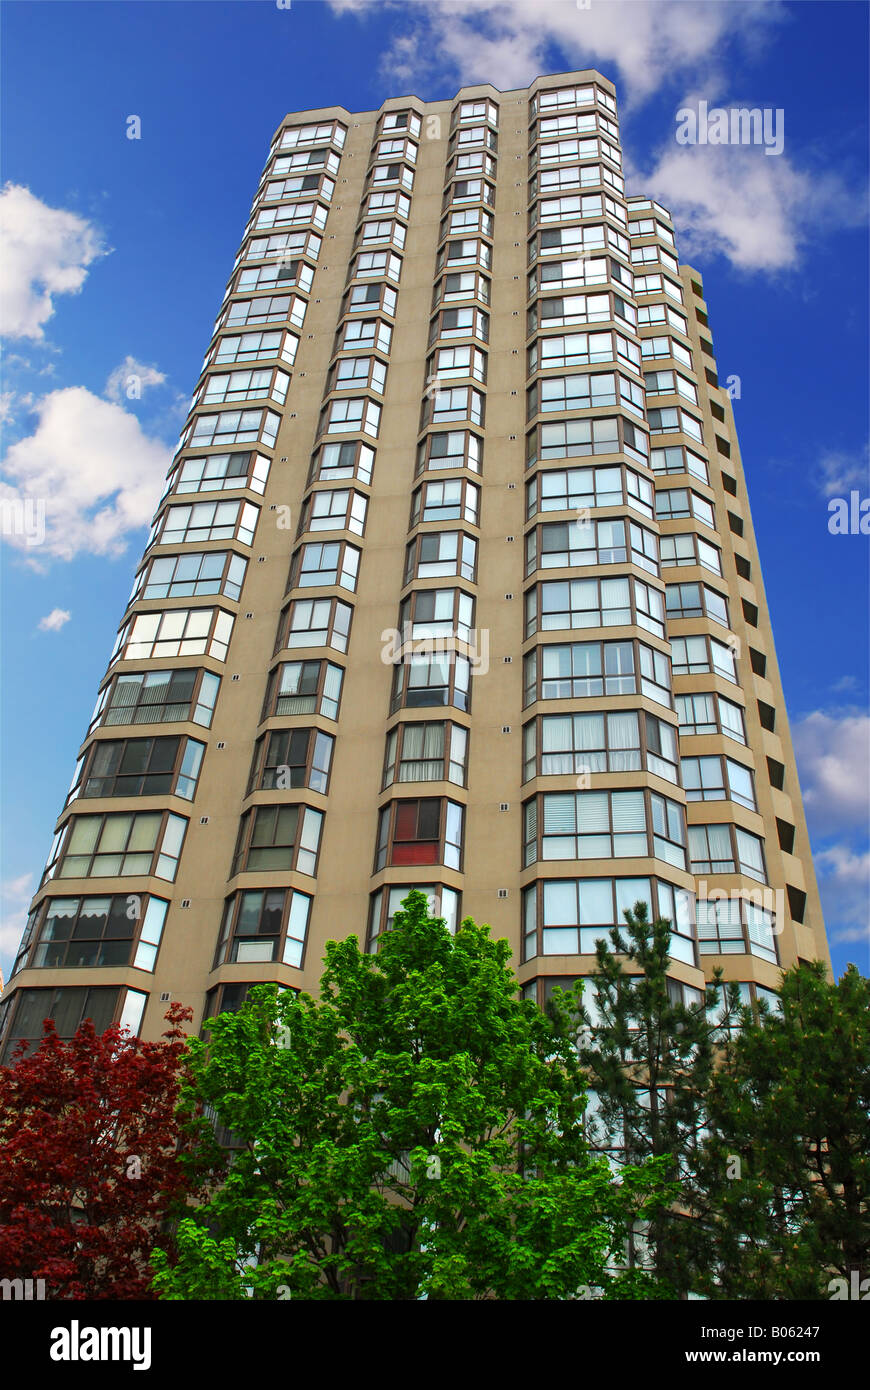 Tall condominium or apartment building in the city Stock Photo